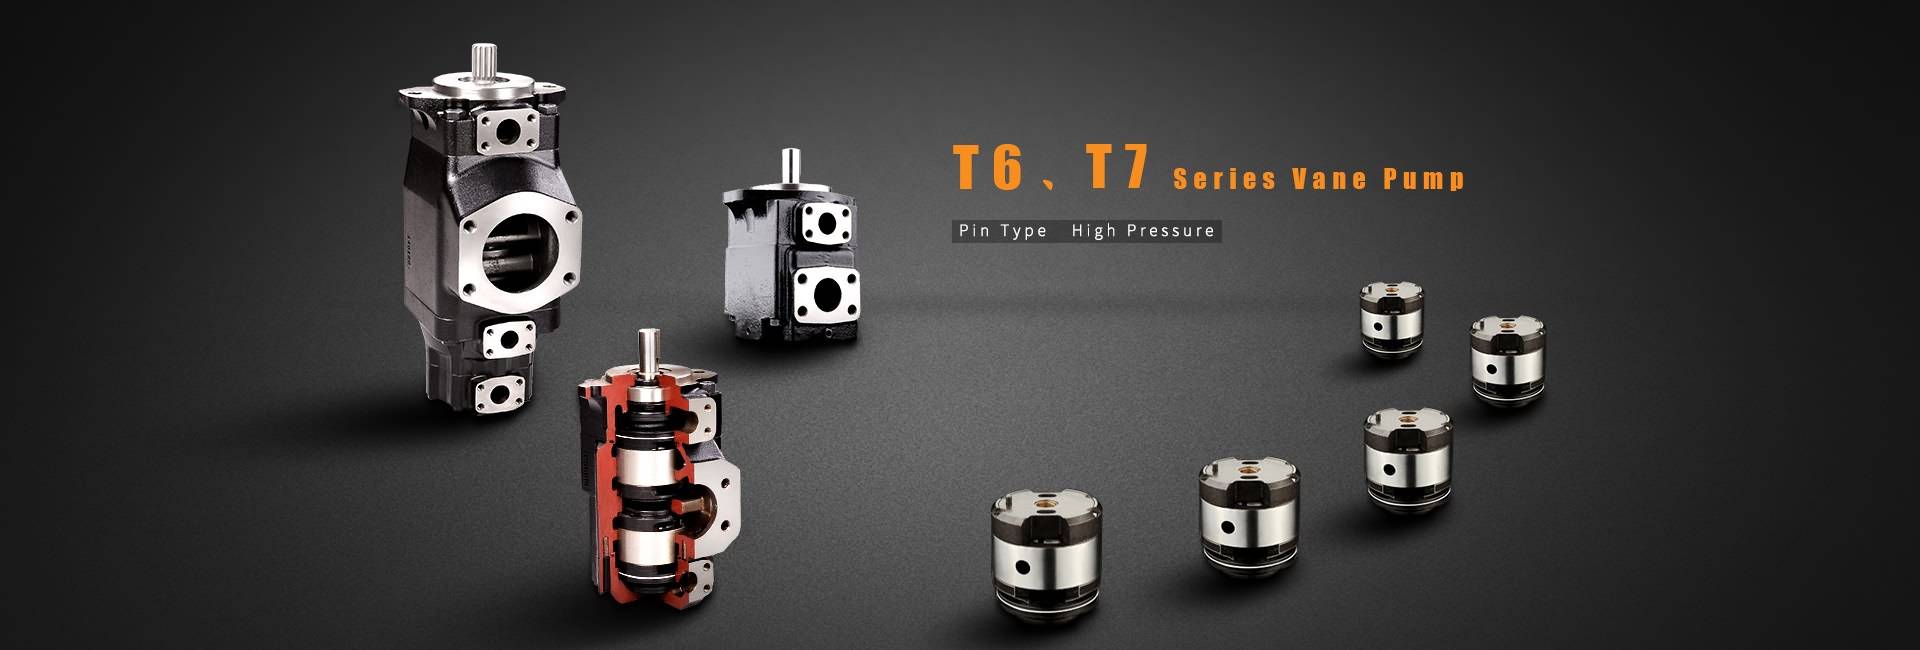 T6, T7 Series Vane Pump